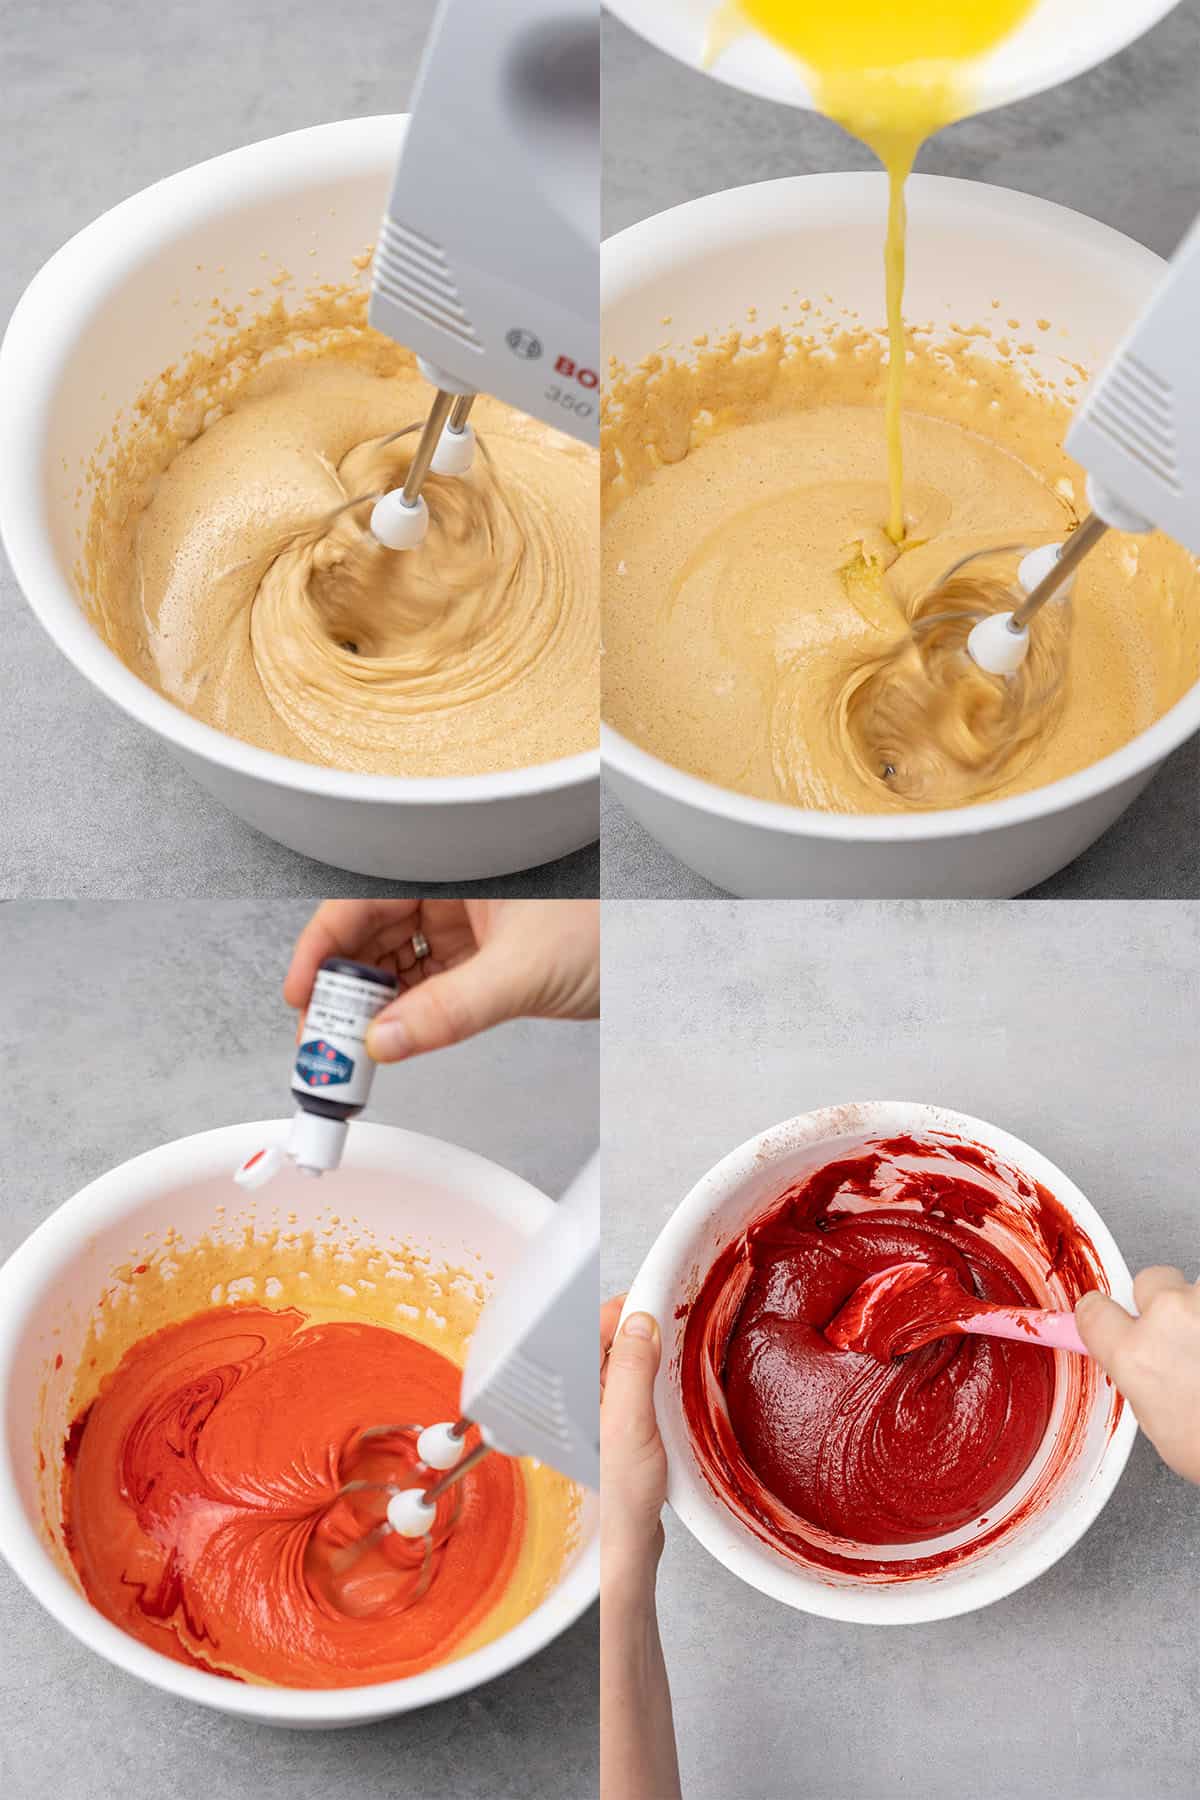 Red velvet brownies step-by-step process.